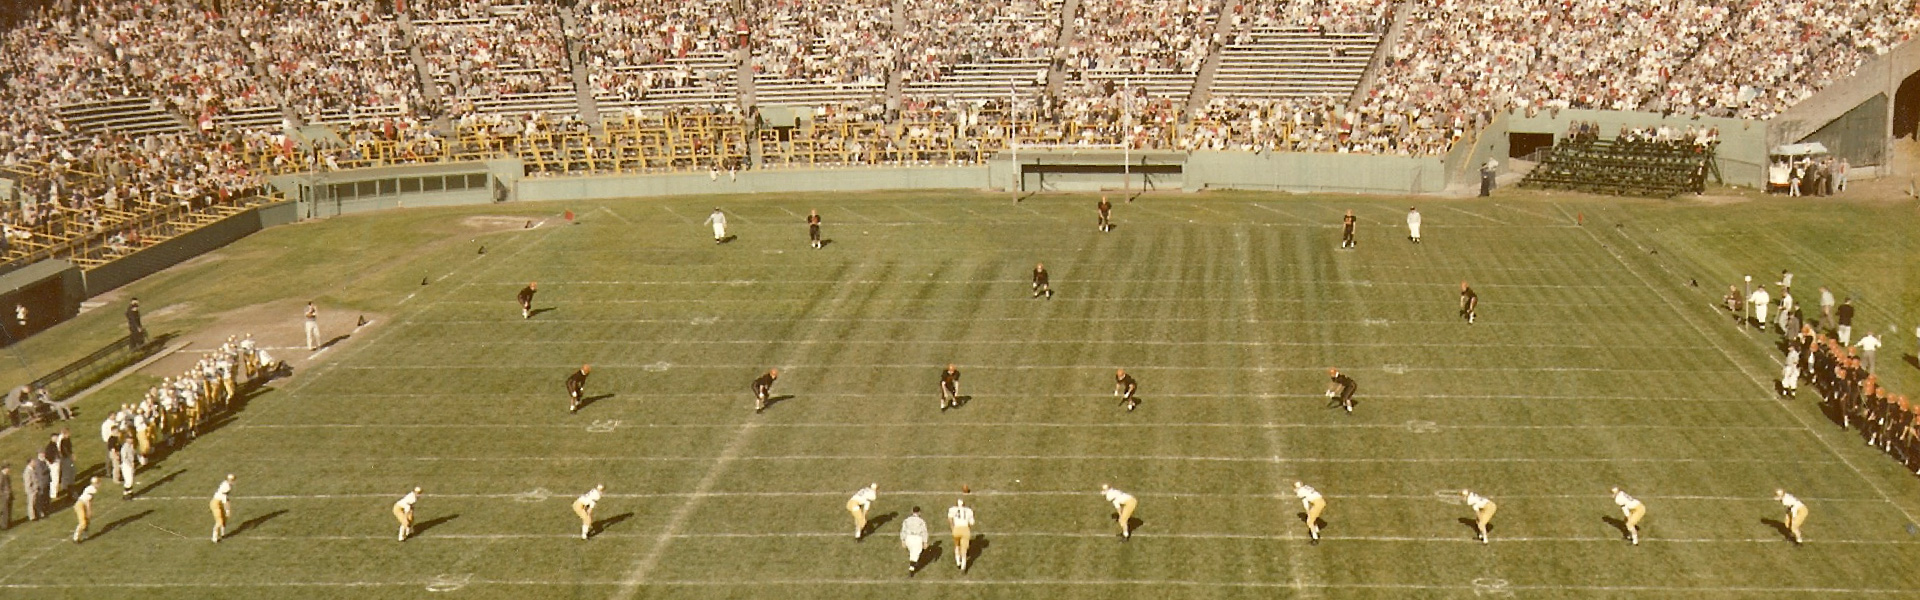 1960s Kickoff receive vs Washington